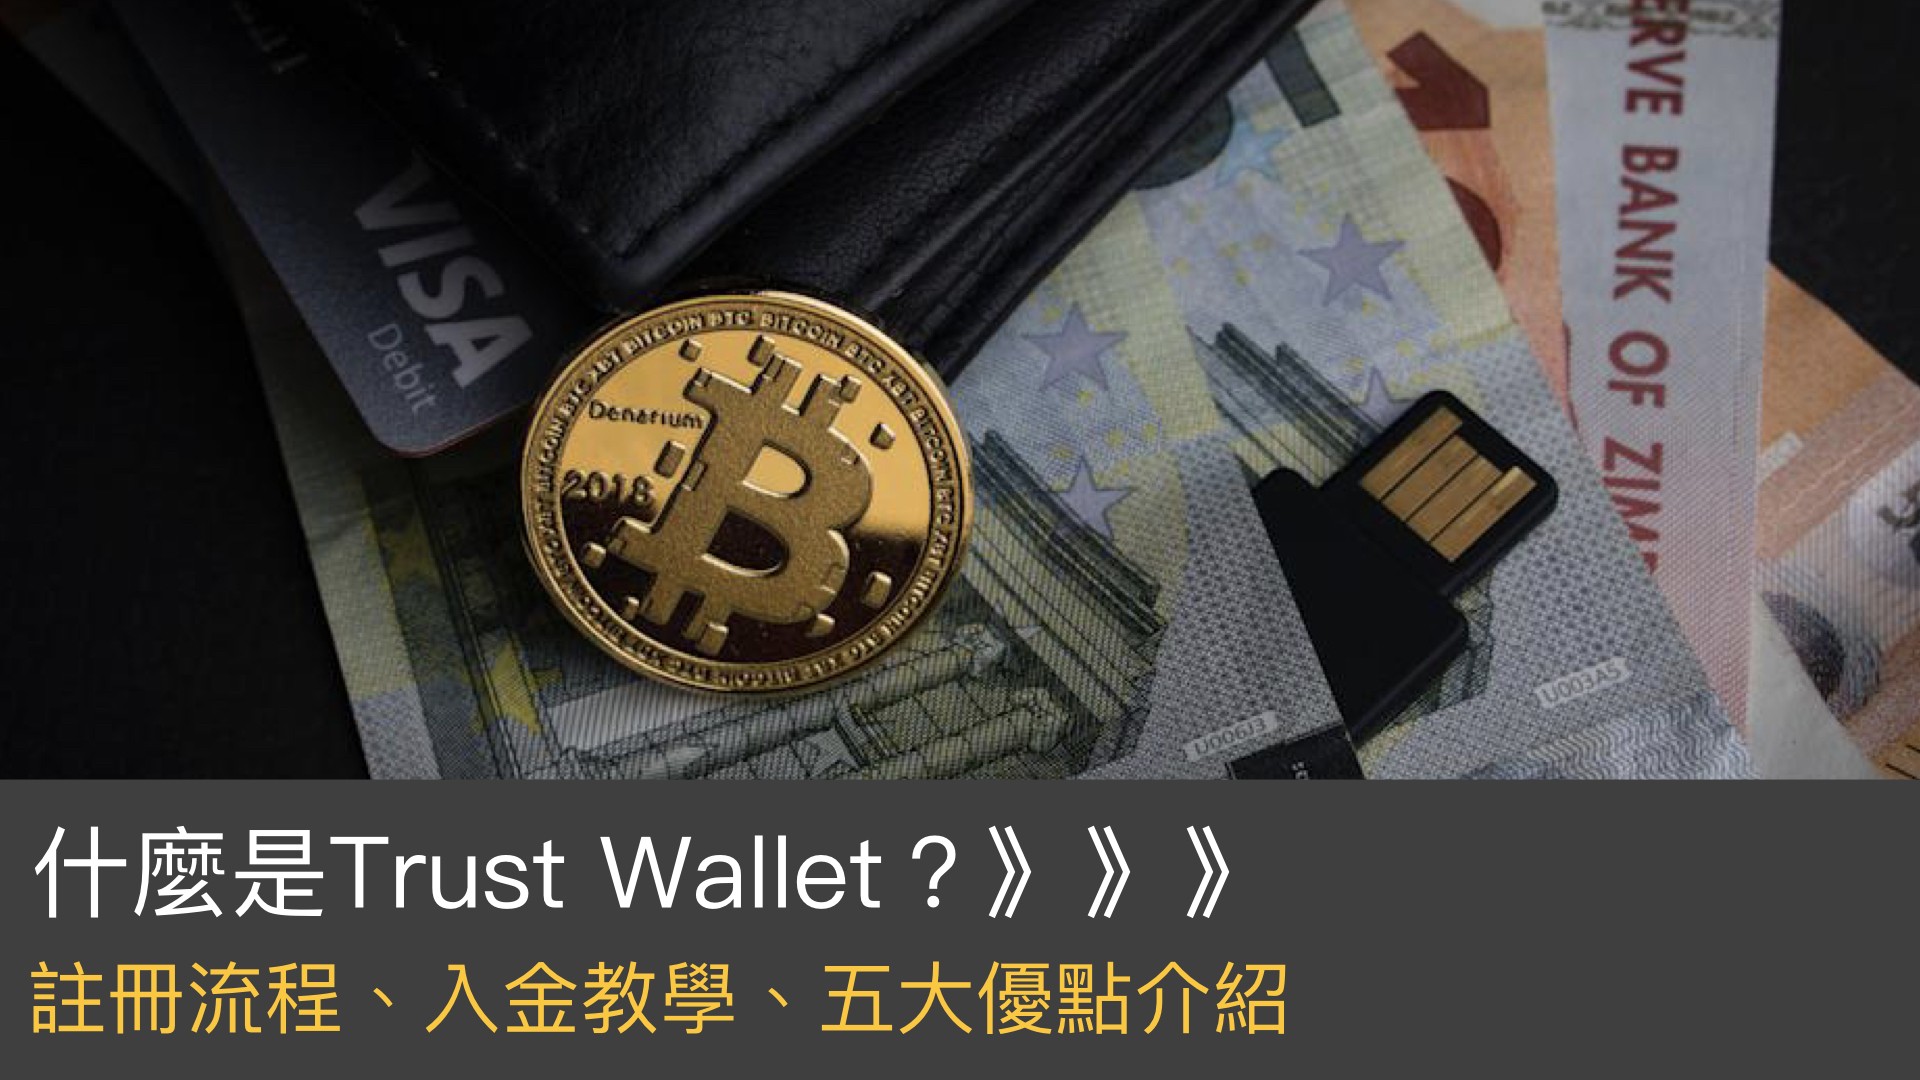 Trust Wallet介紹：最實用的加密貨幣錢包、圖解操作流程、入金教學、服務內容